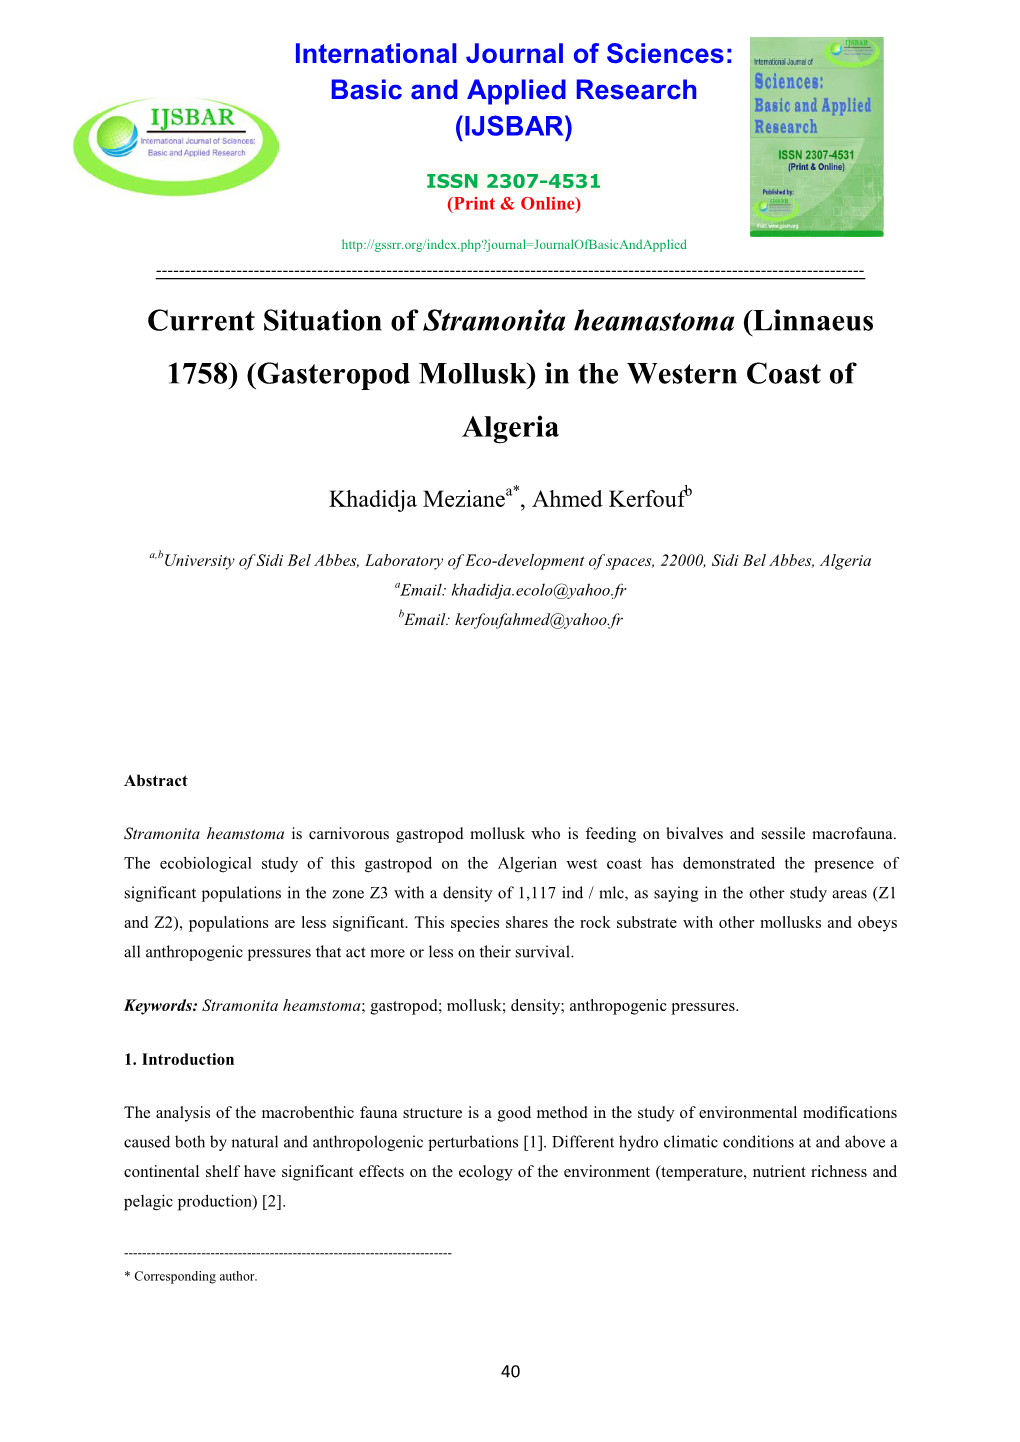 Current Situation of Stramonita Heamastoma (Linnaeus 1758) (Gasteropod Mollusk) in the Western Coast of Algeria